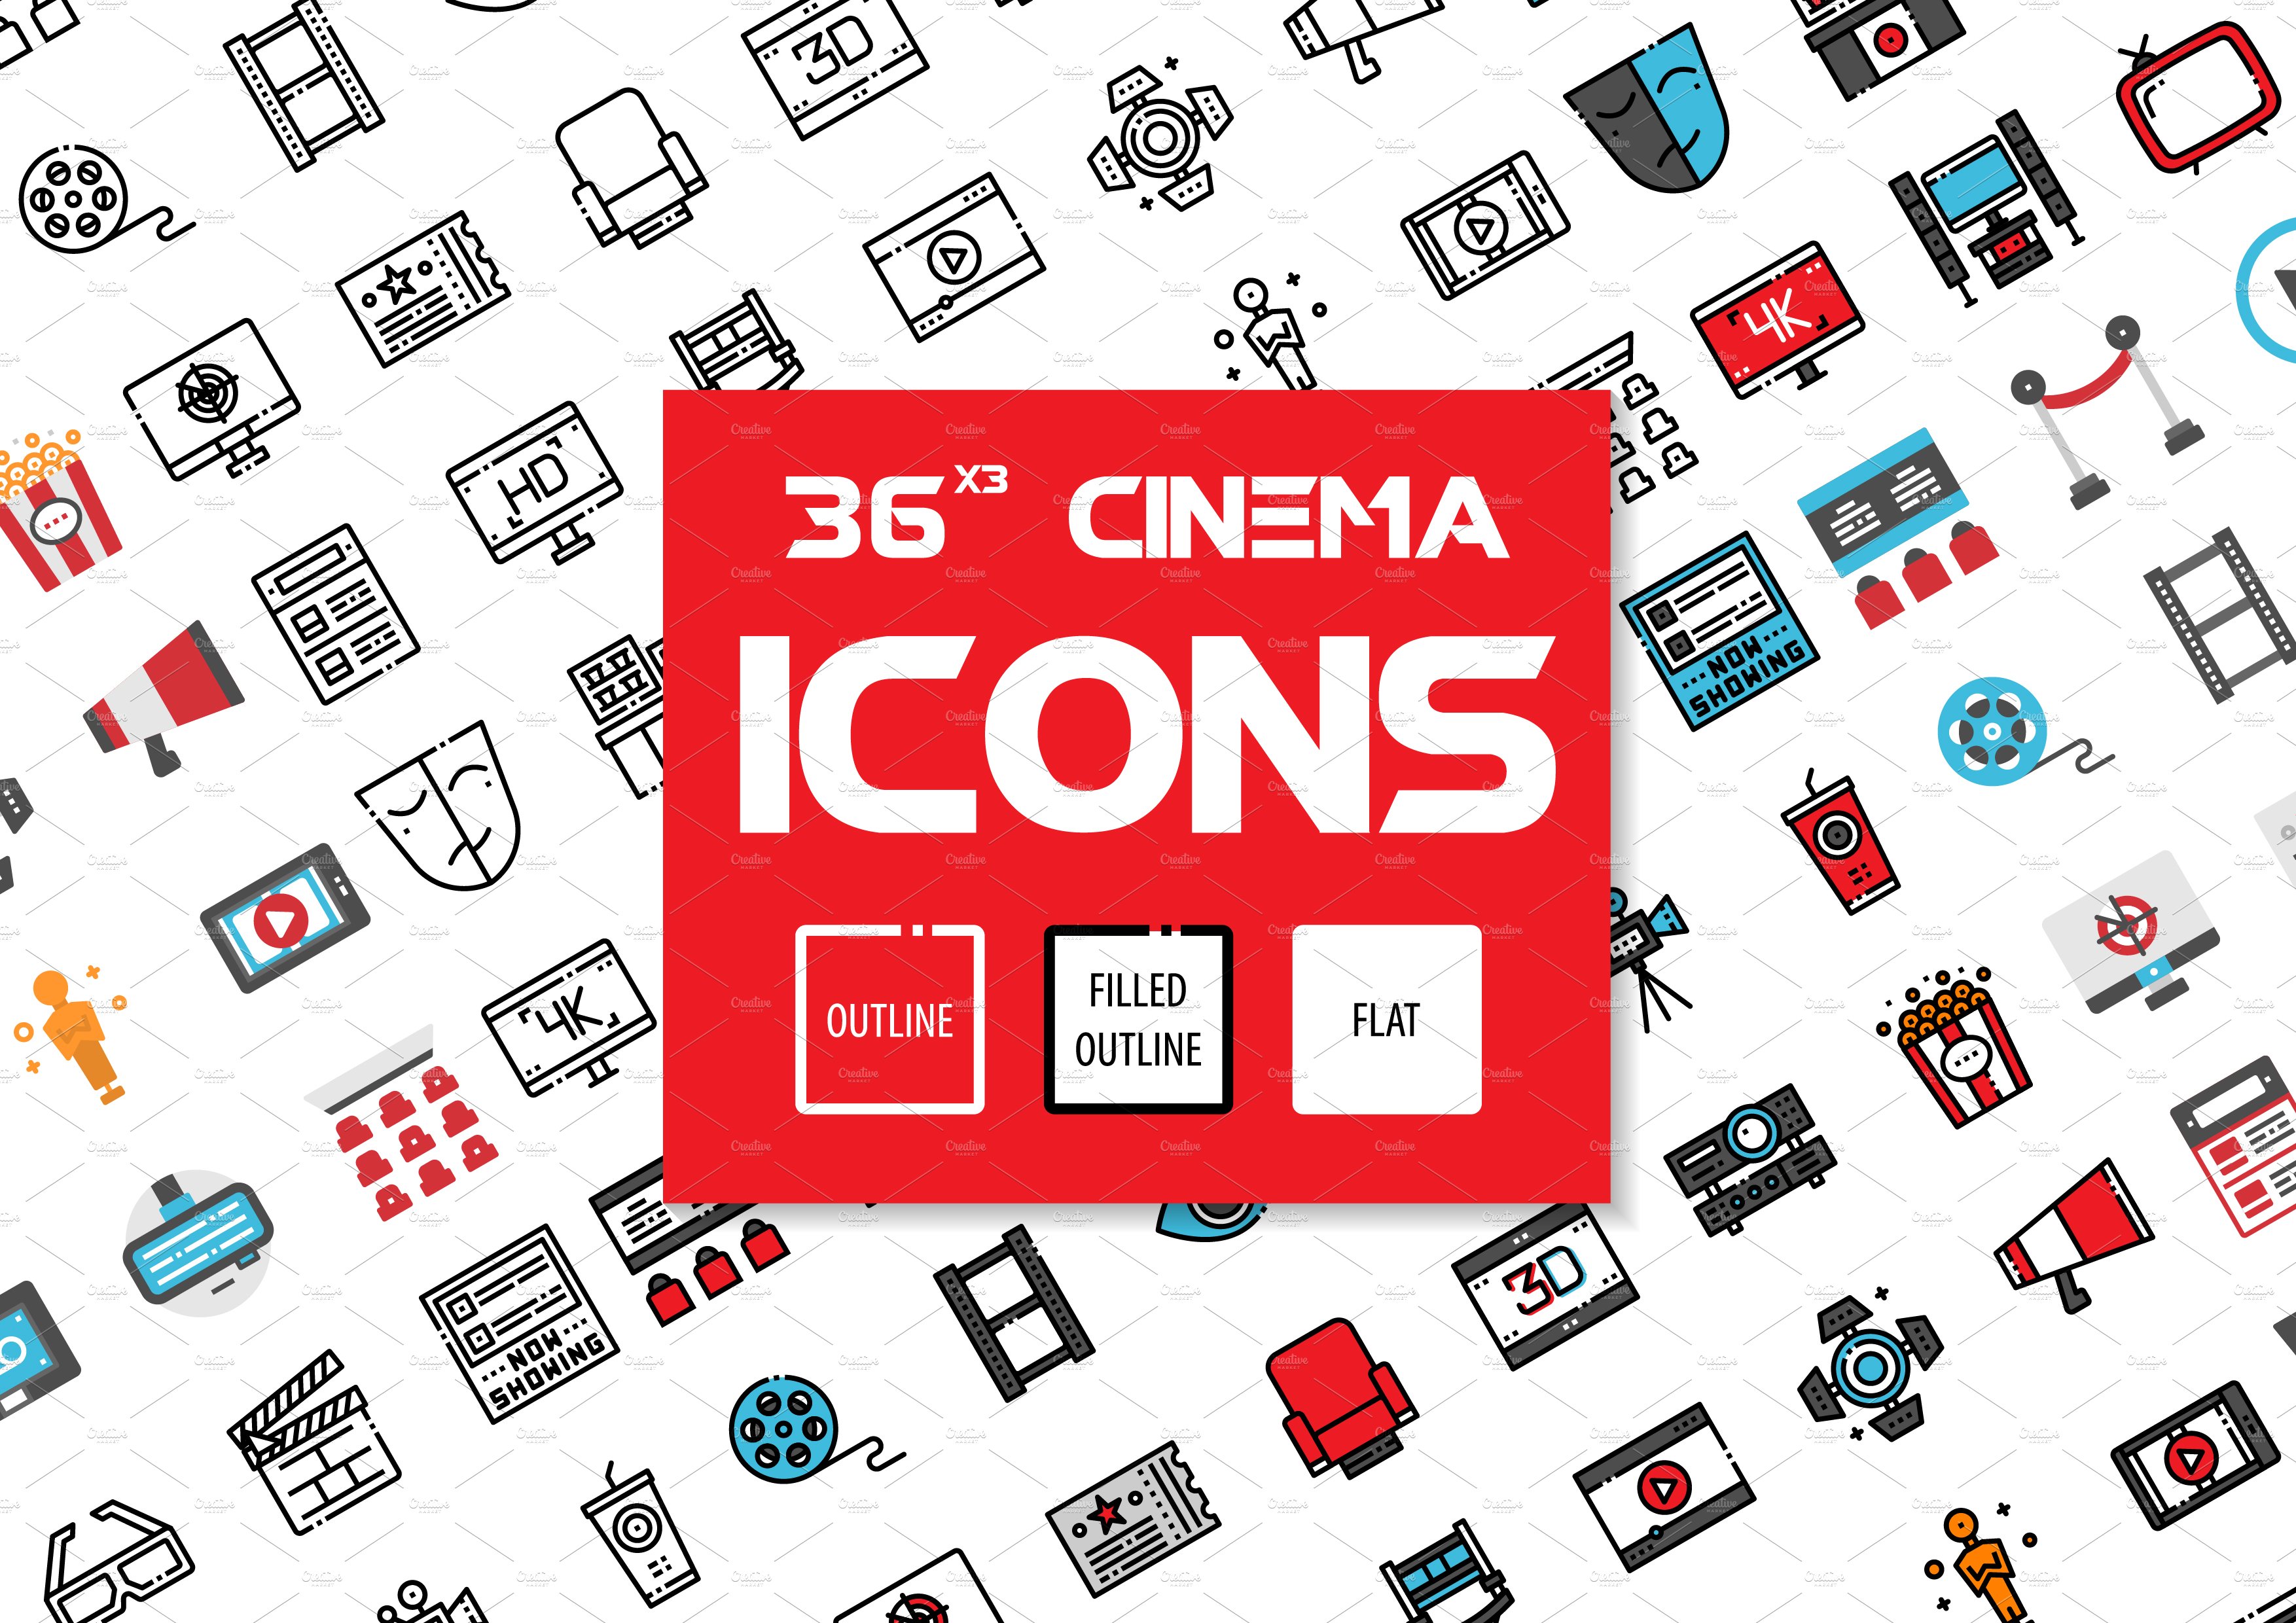 36x3 Cinema icons cover image.